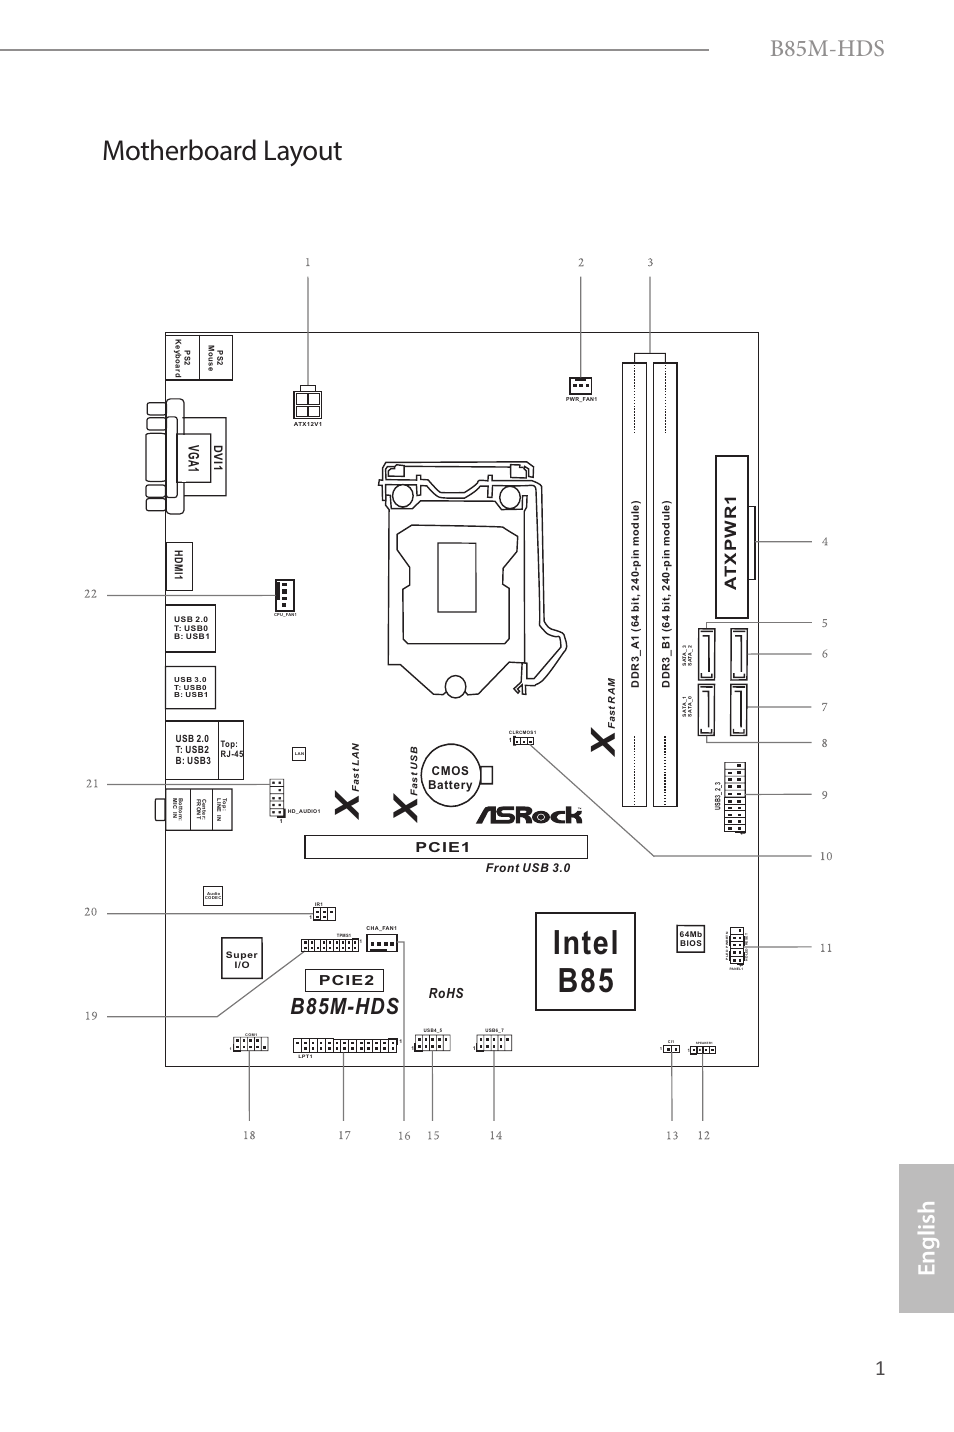 Intel b85, Motherboard layout, B85m-hds | ASRock B85M-HDS User Manual |  Page 3 / 57 | Original mode